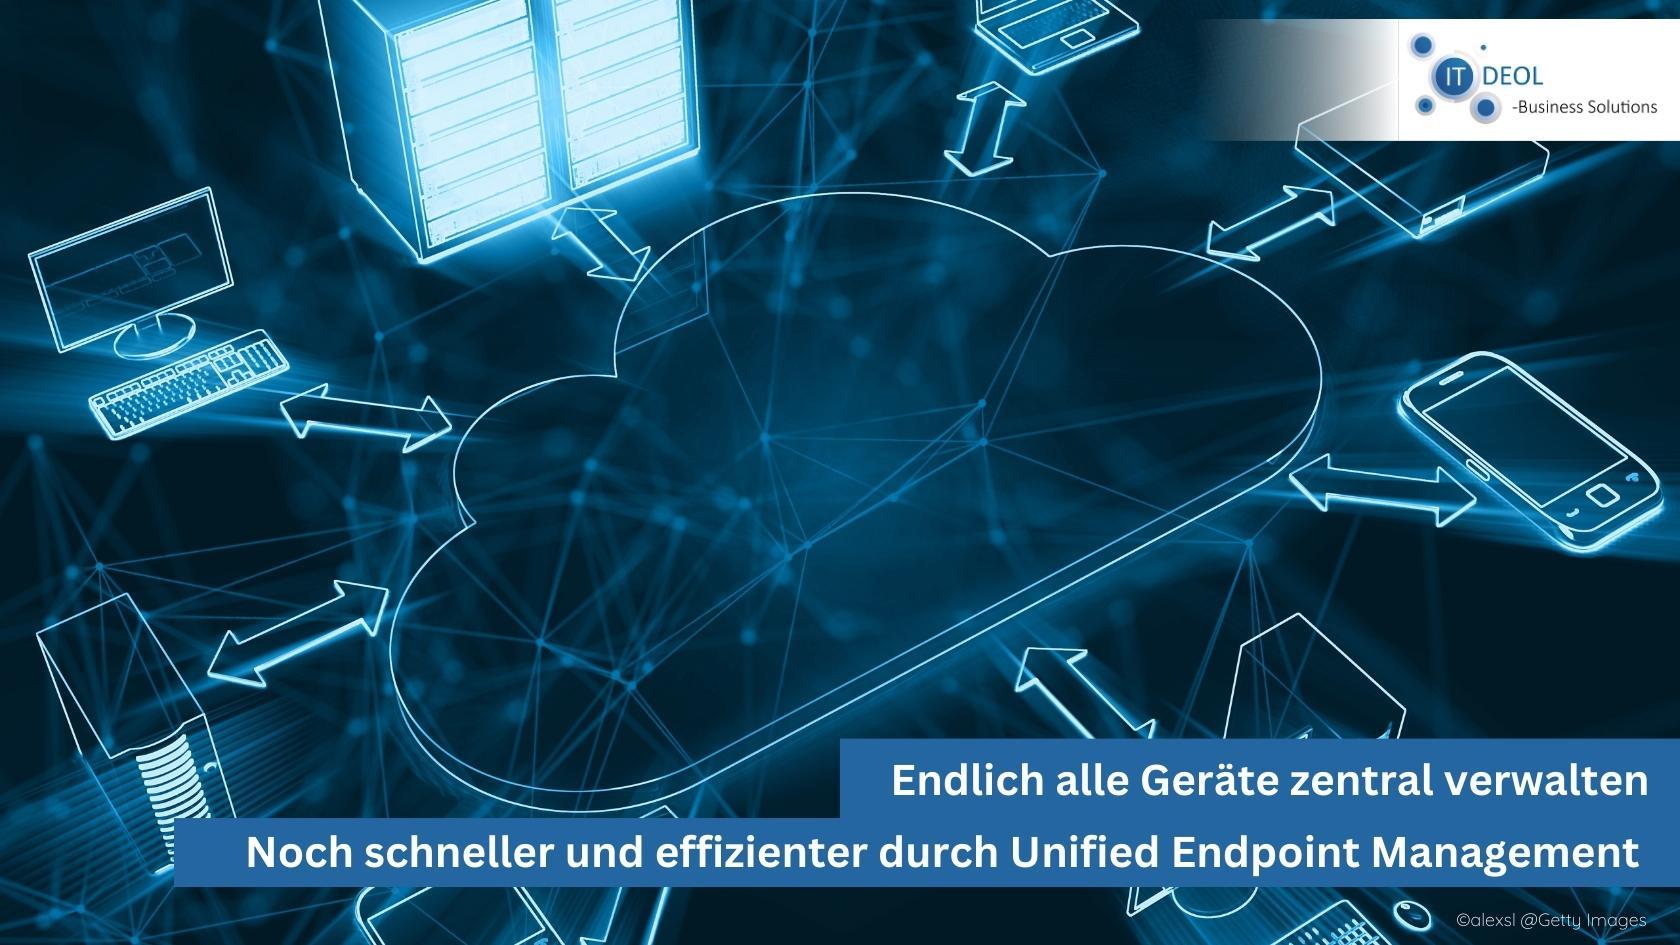 Unified Endpoint Management mit IT Deol aus Siegburg